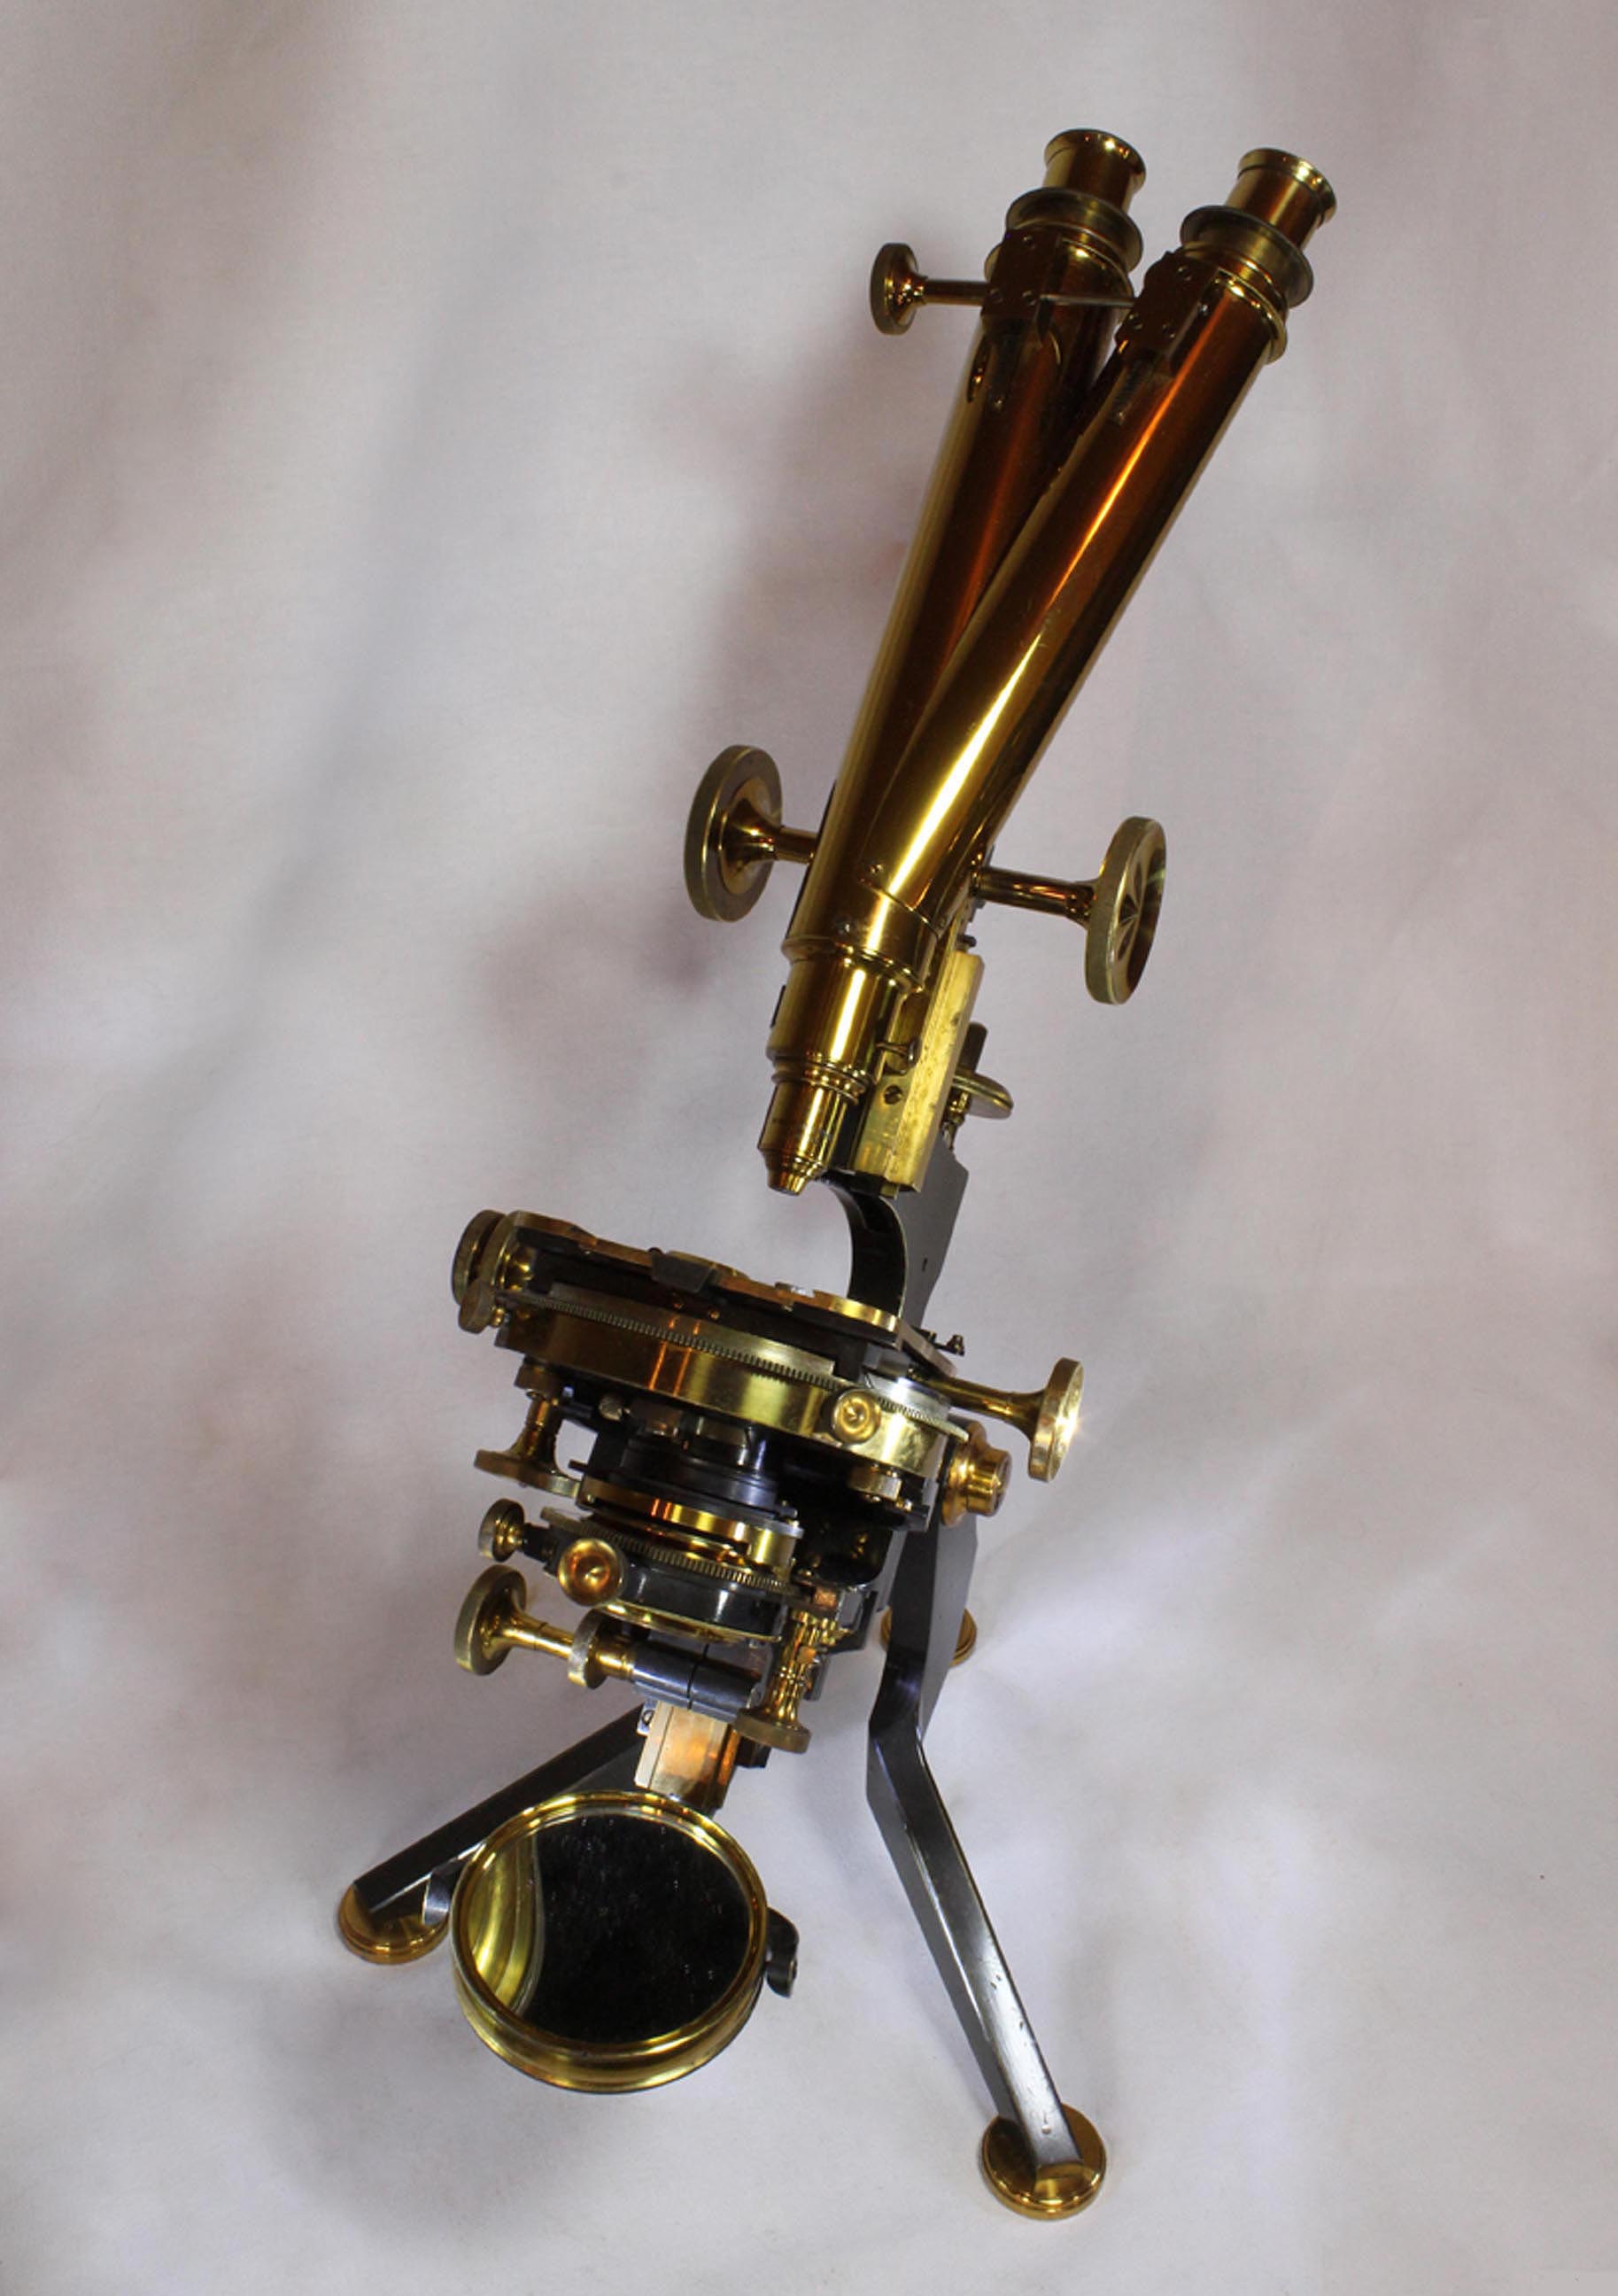 GVH Microscope binocular tube